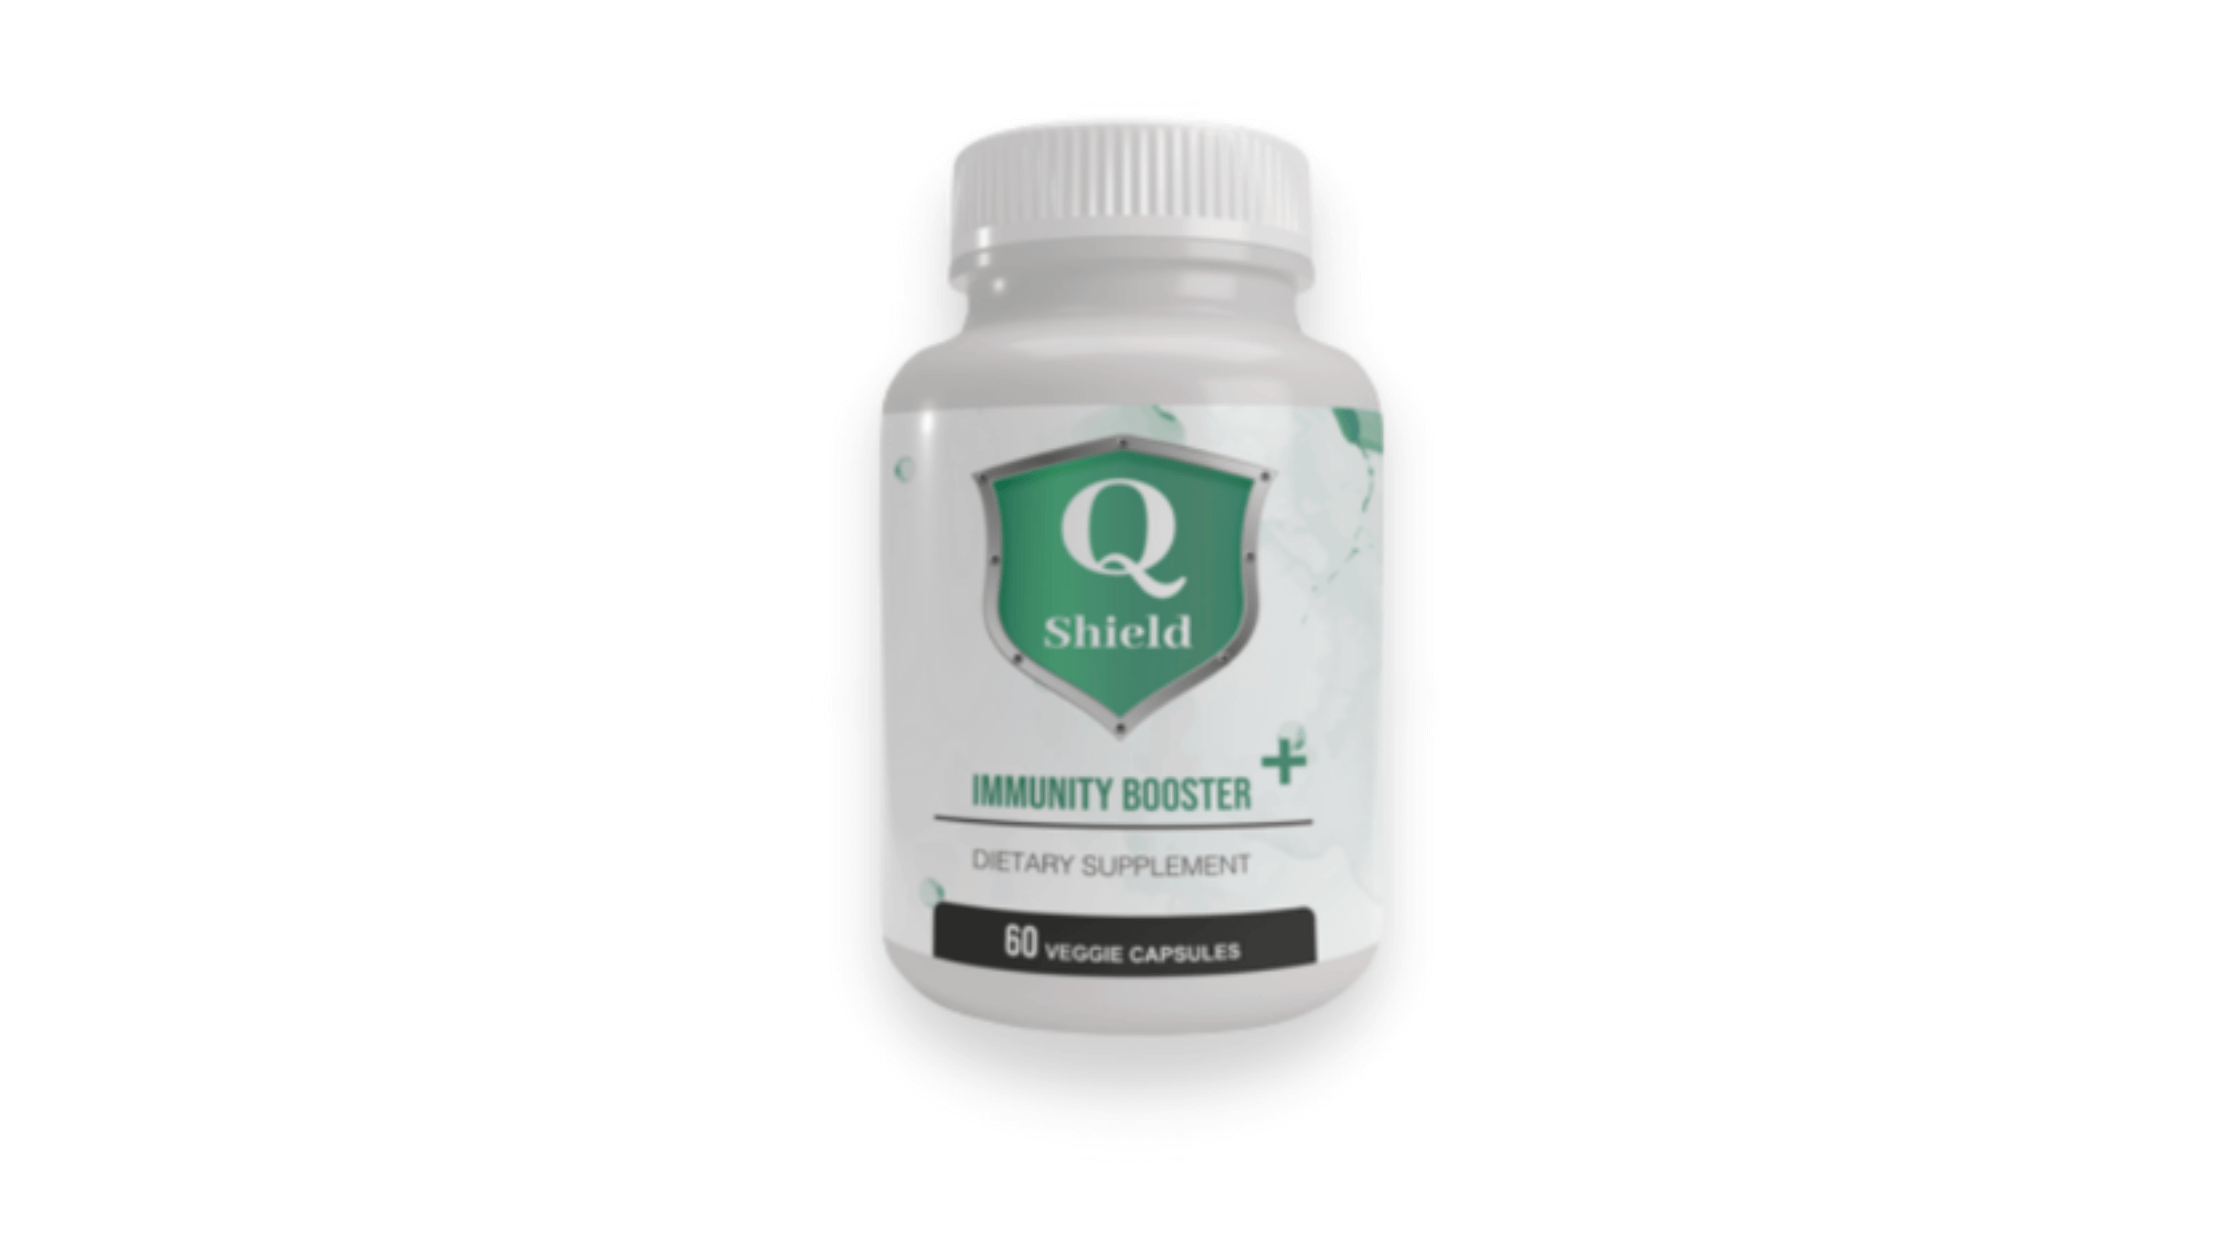 Q Shield Immunity Booster+ Reviews